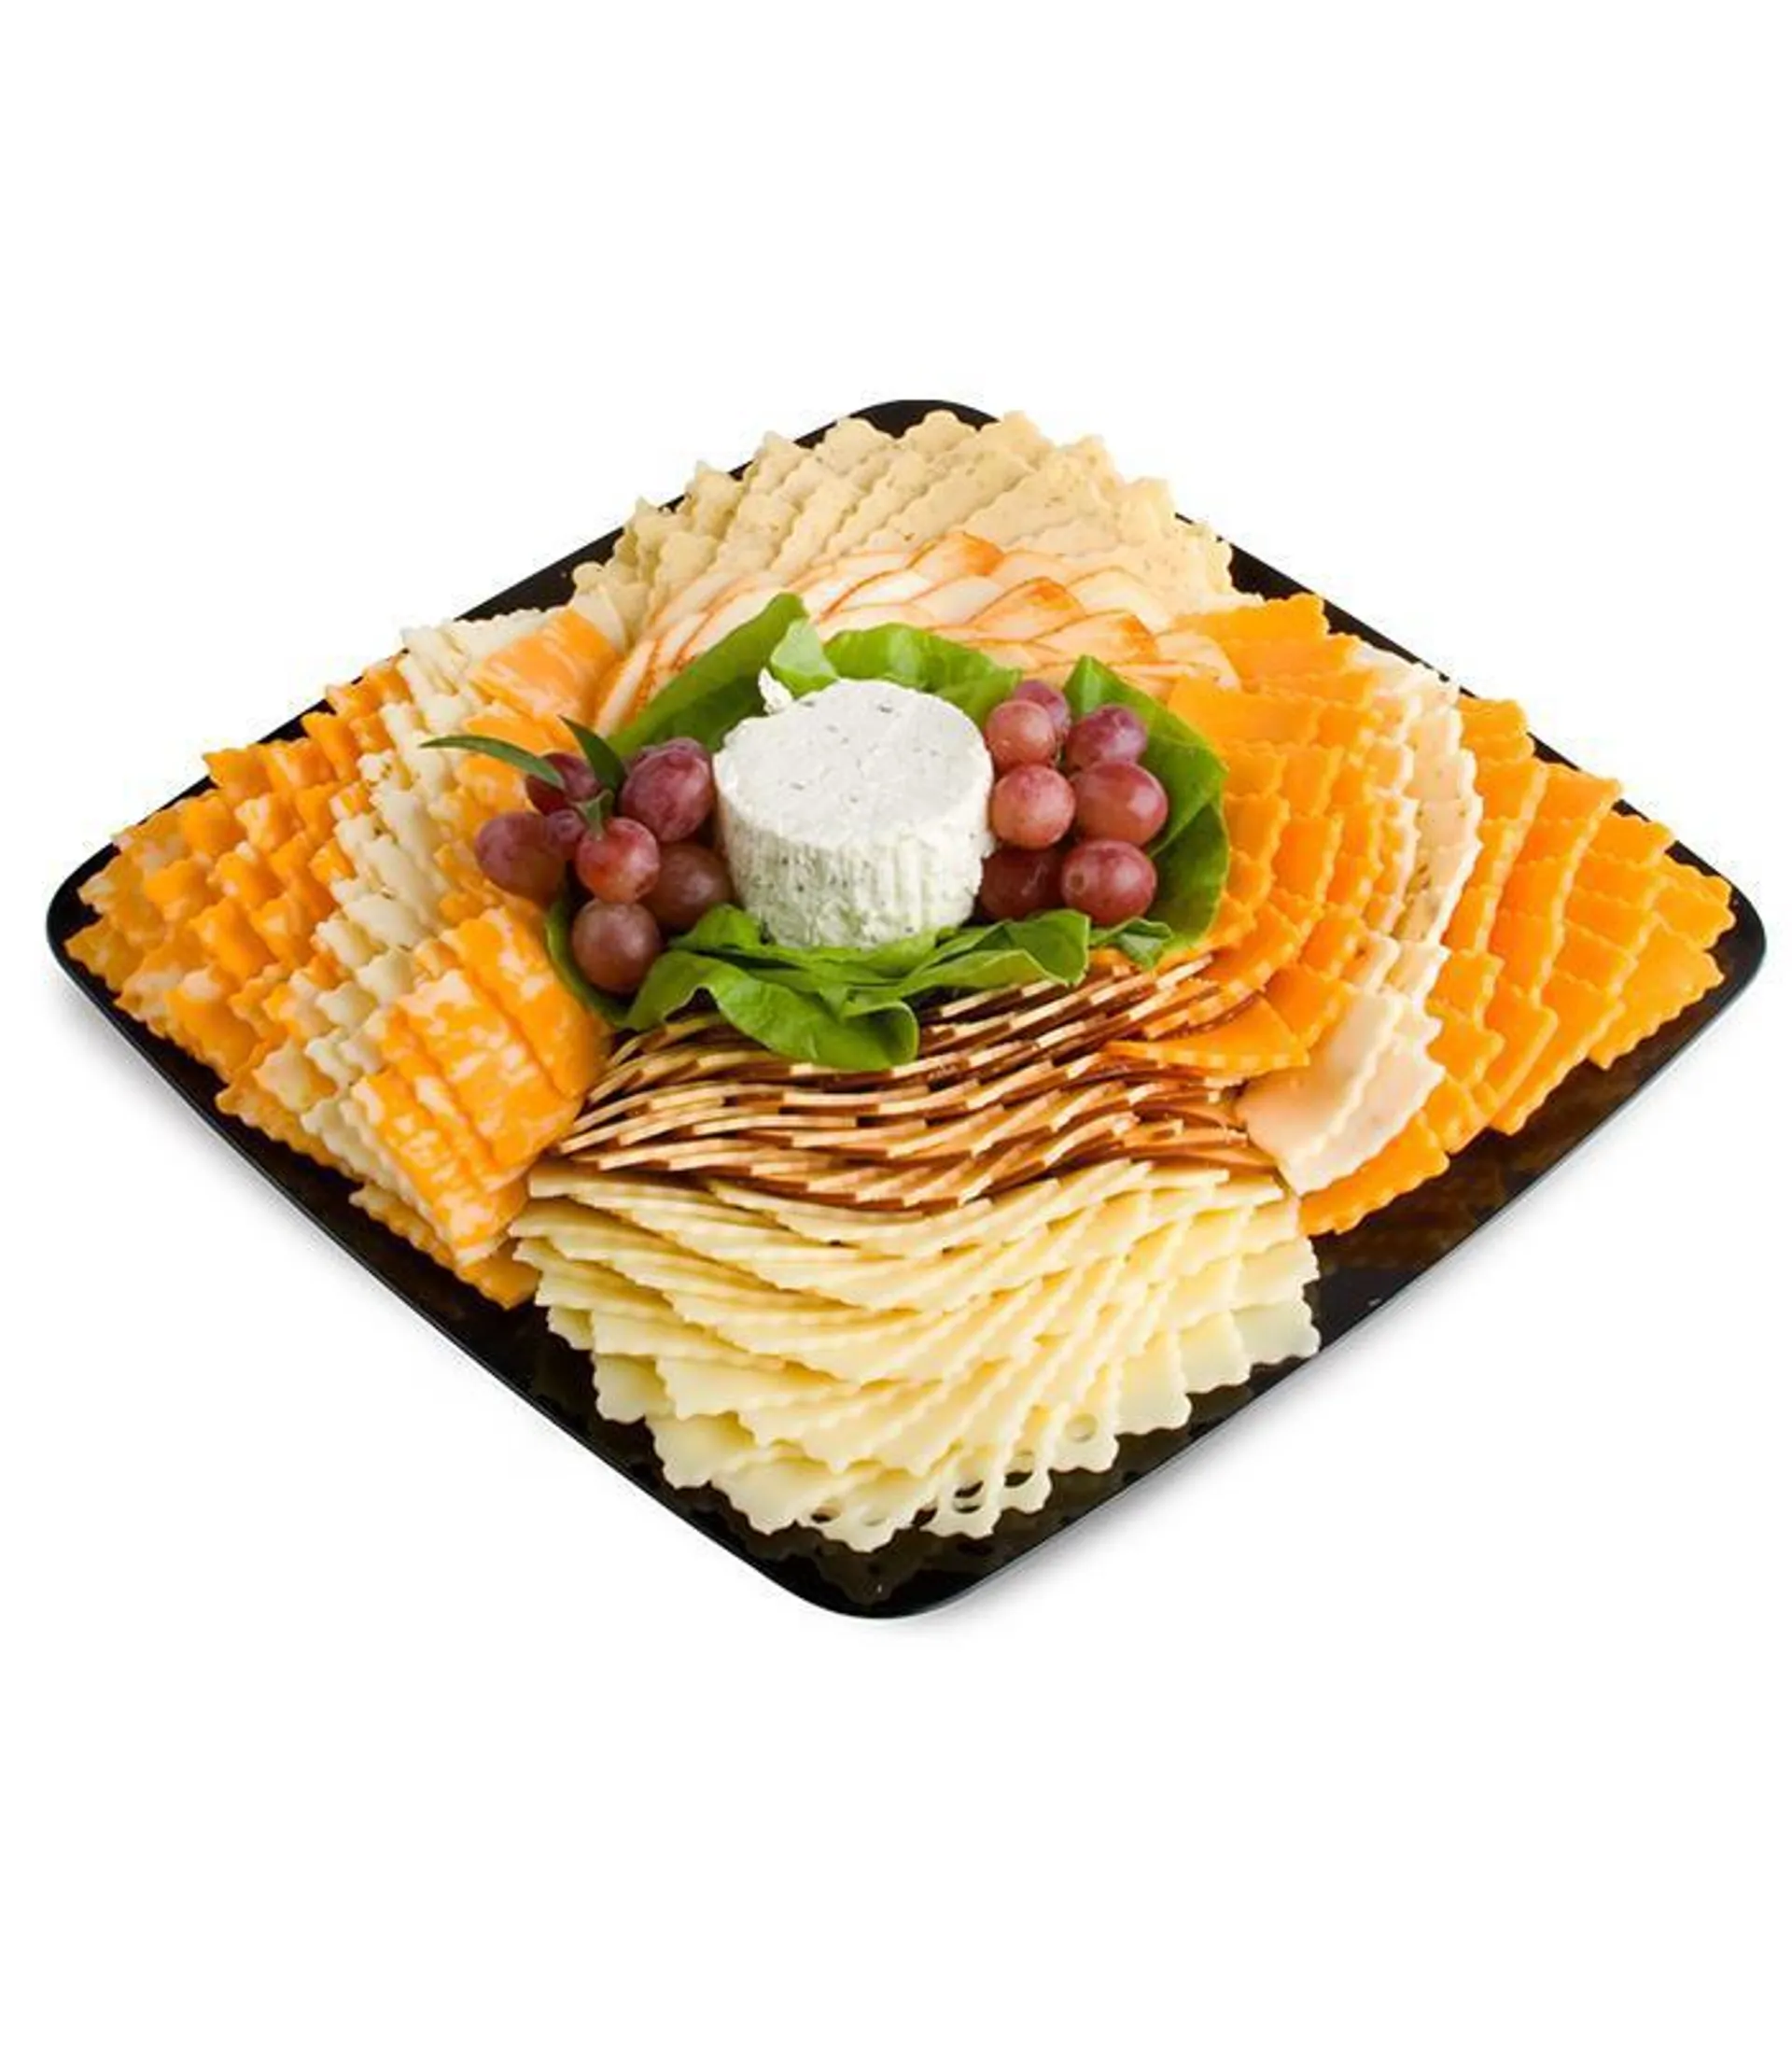 Cheese Tray - Small (Serves 15-20)